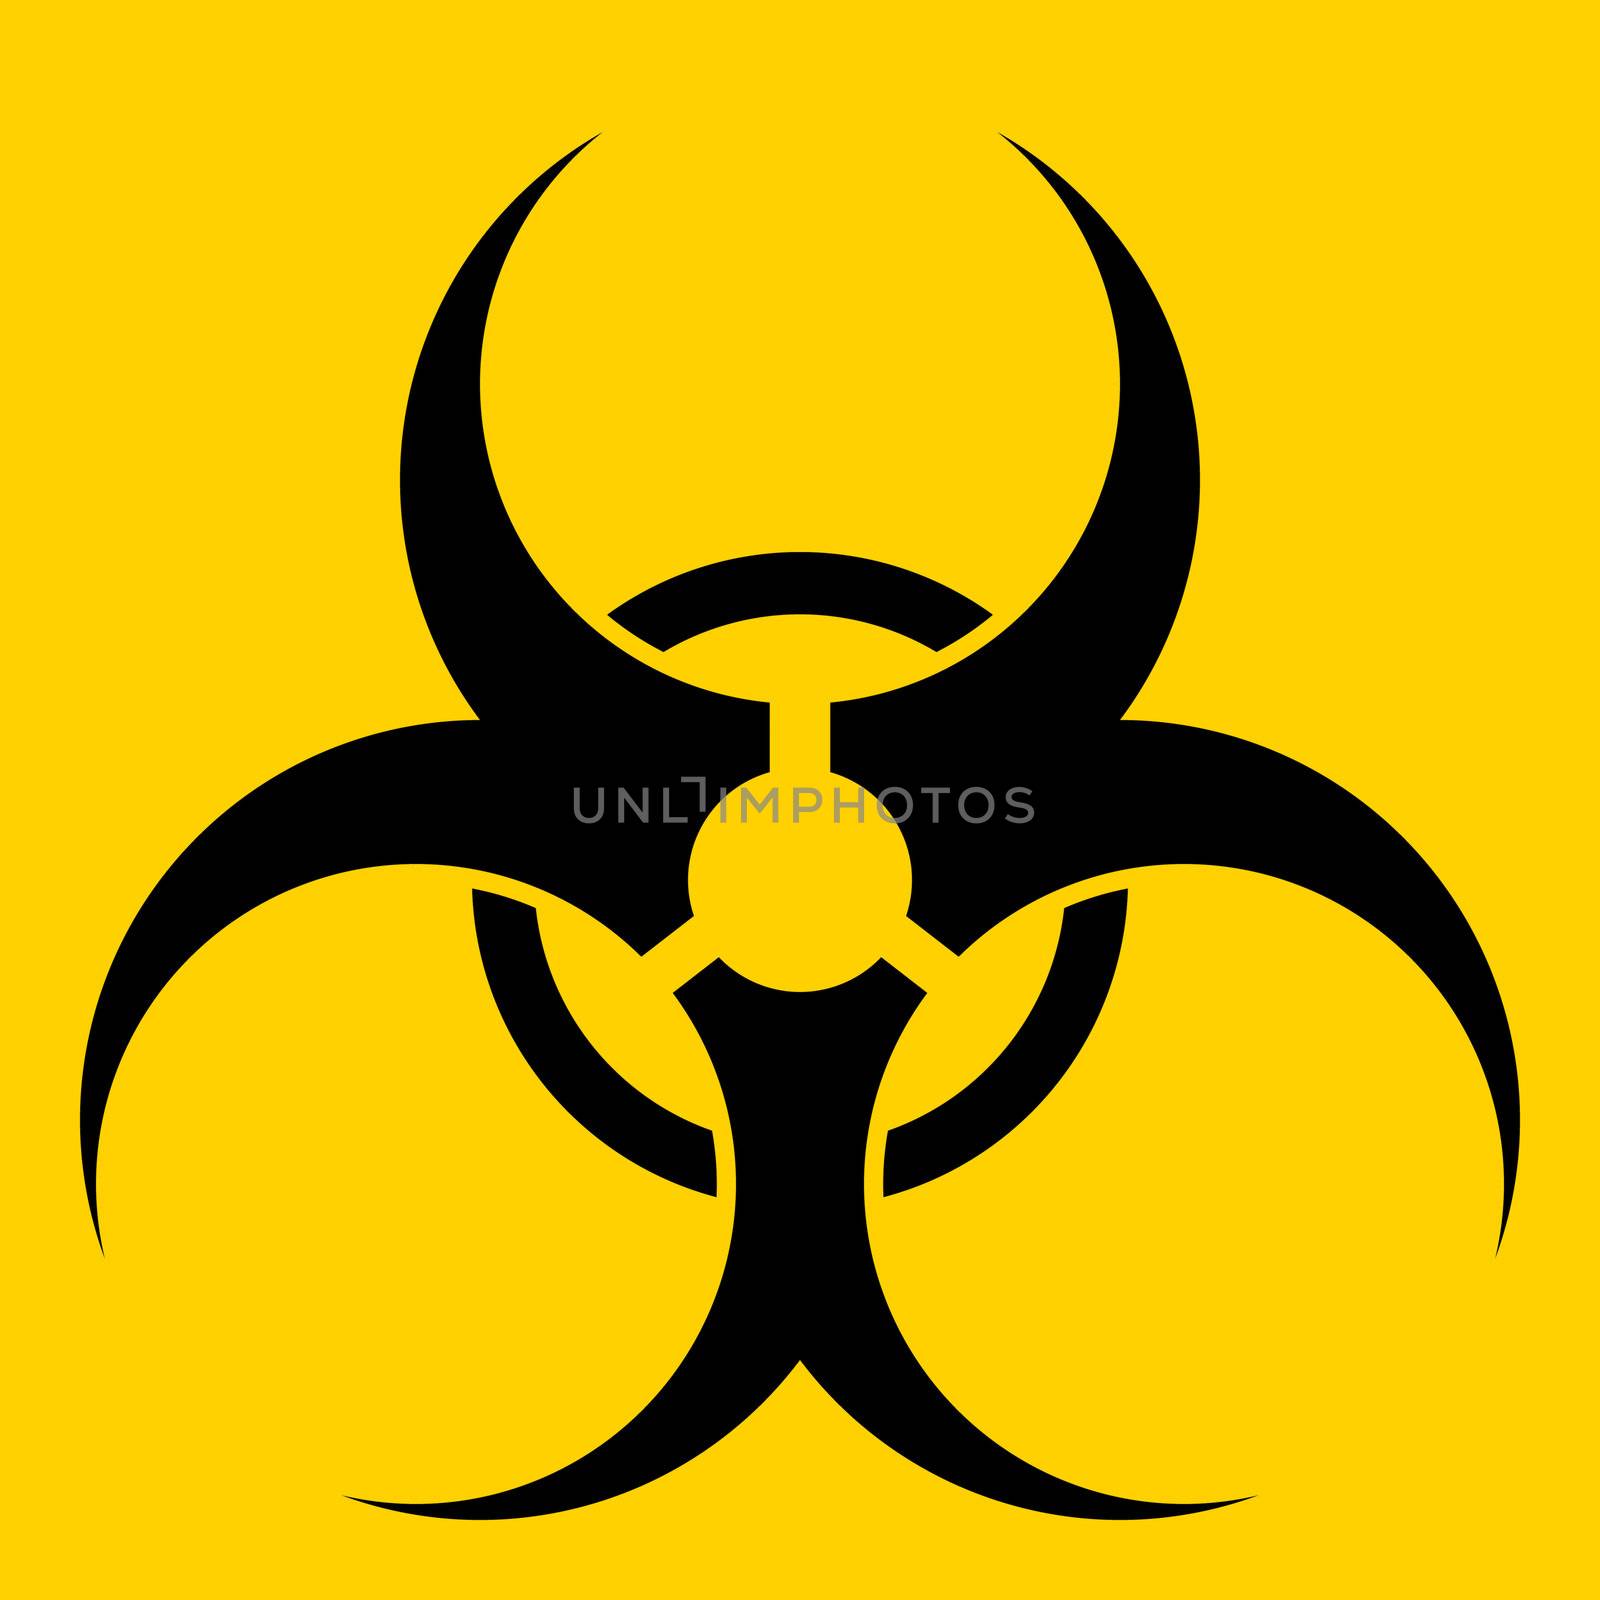 Biohazard symbol over a yellow.